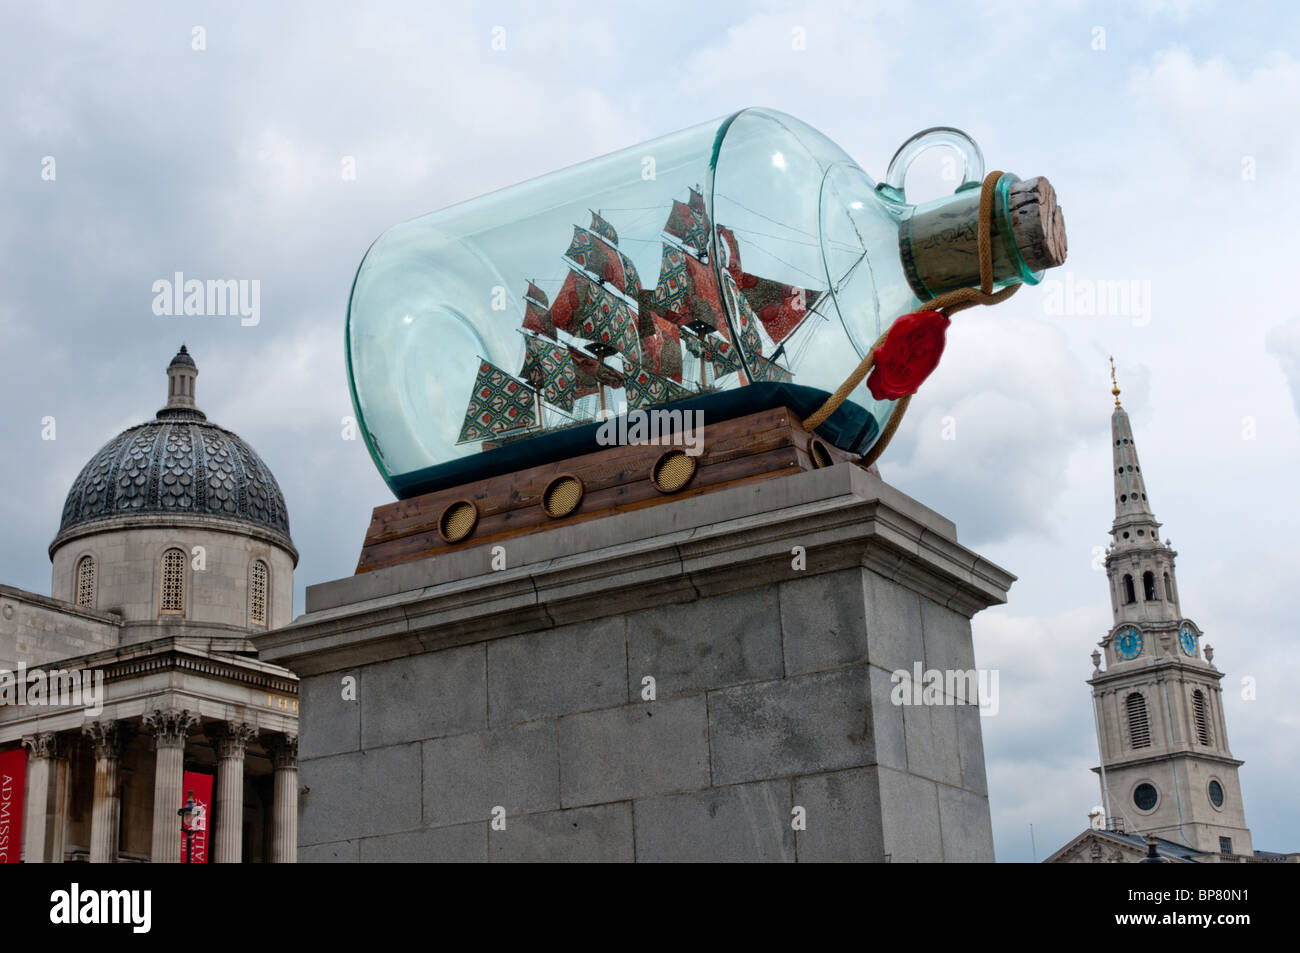 "Nelsons Schiff in der Flasche" von Yinka Shonibare am Trafalgar Square in London Stockfoto